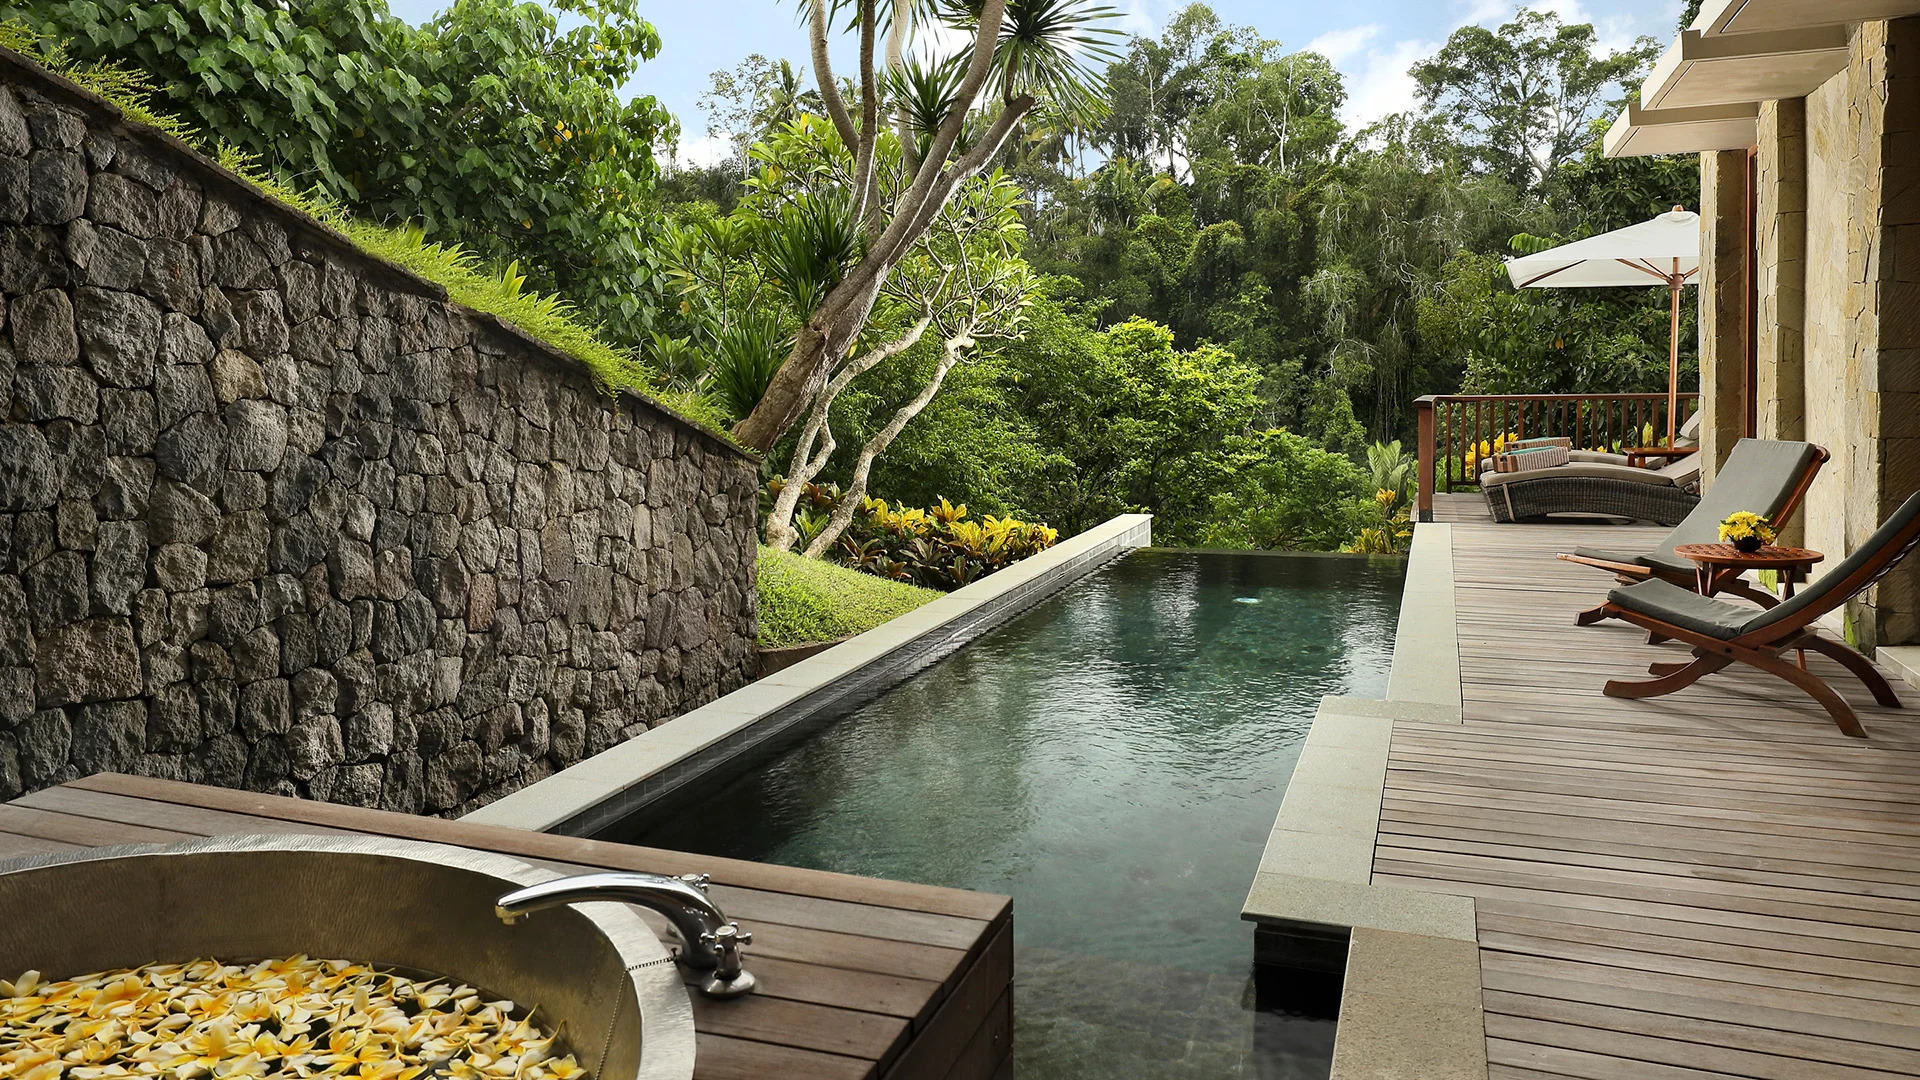 This is the third type of villa at Maya Resort - HEavenly 2 bedroom pool villa